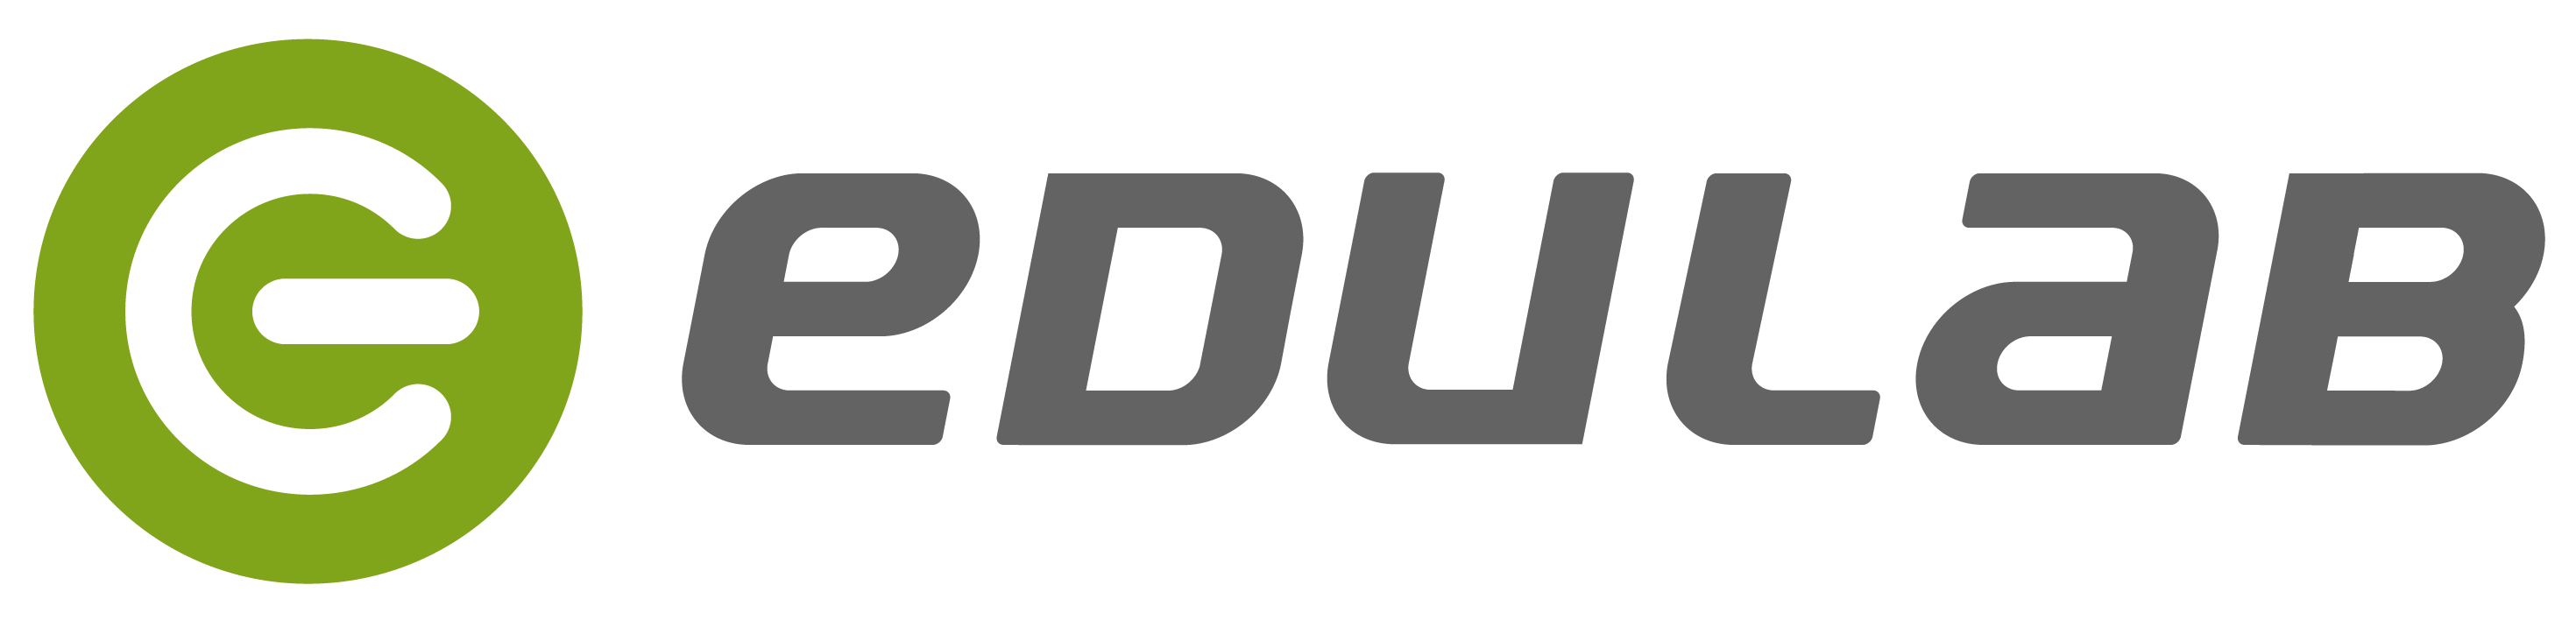 EDULAB-logo